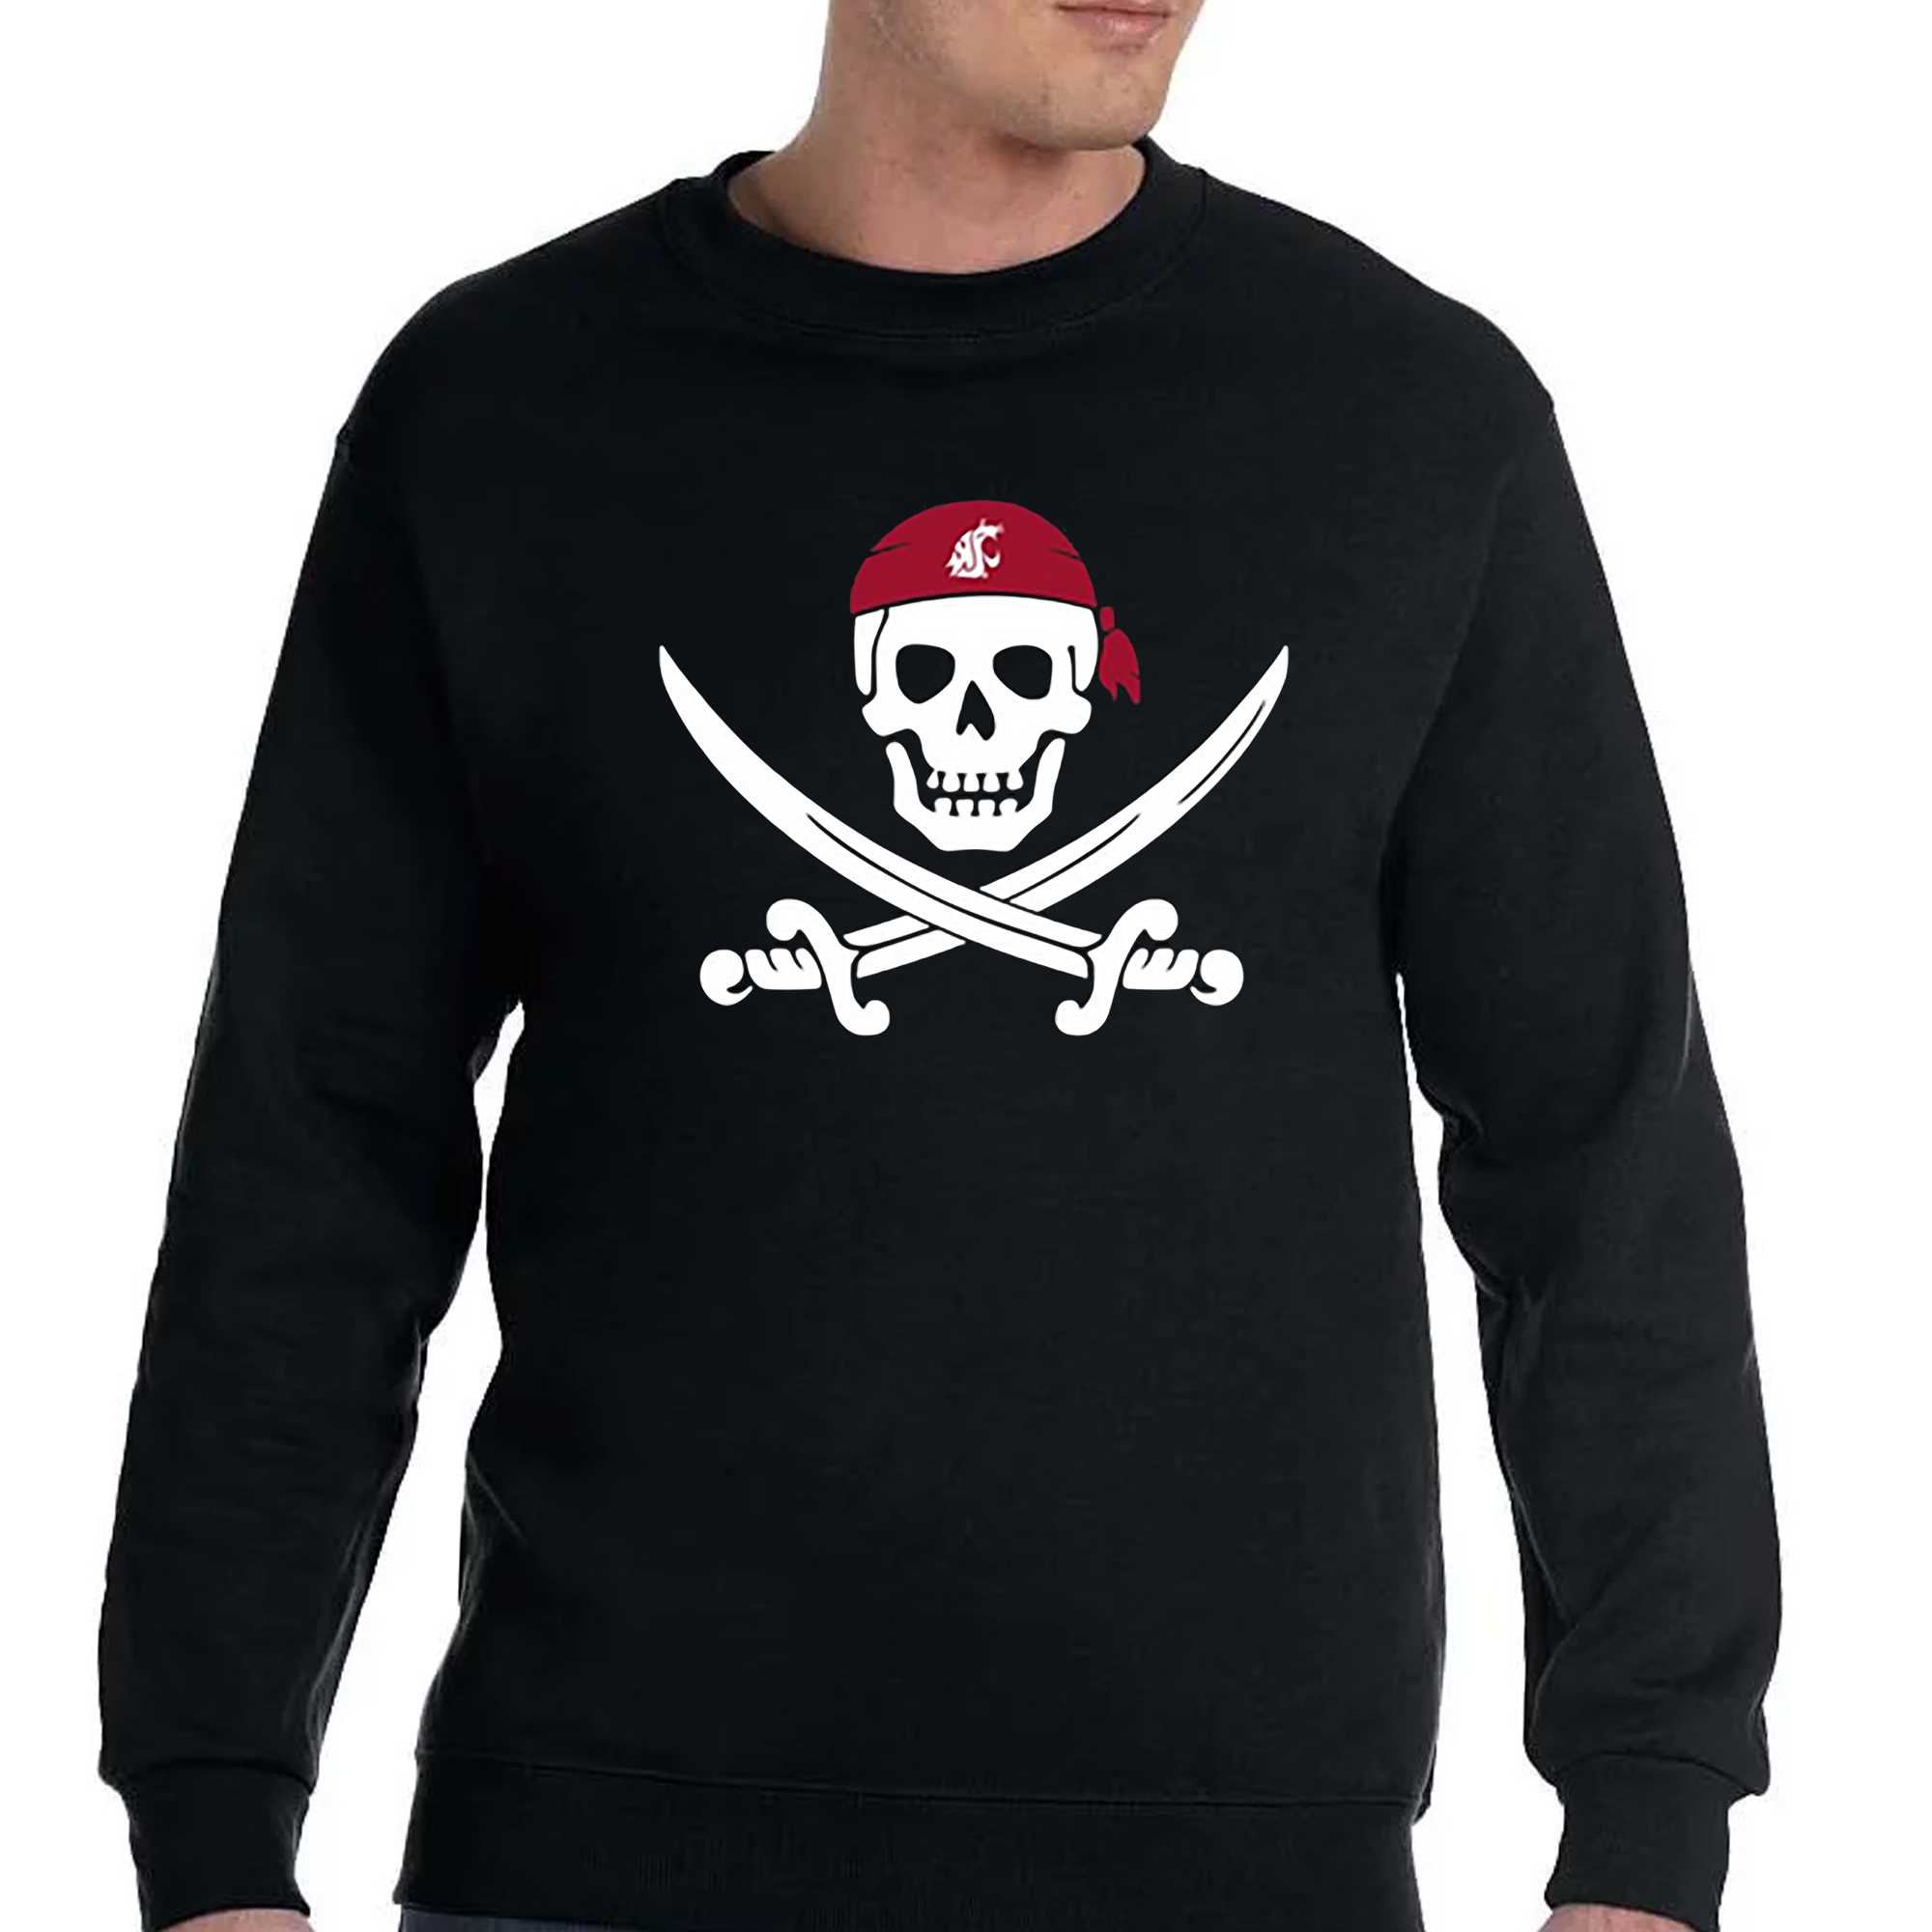 Jake Dickert Wsu Golf Pirate Skull Shirt - Shibtee Clothing